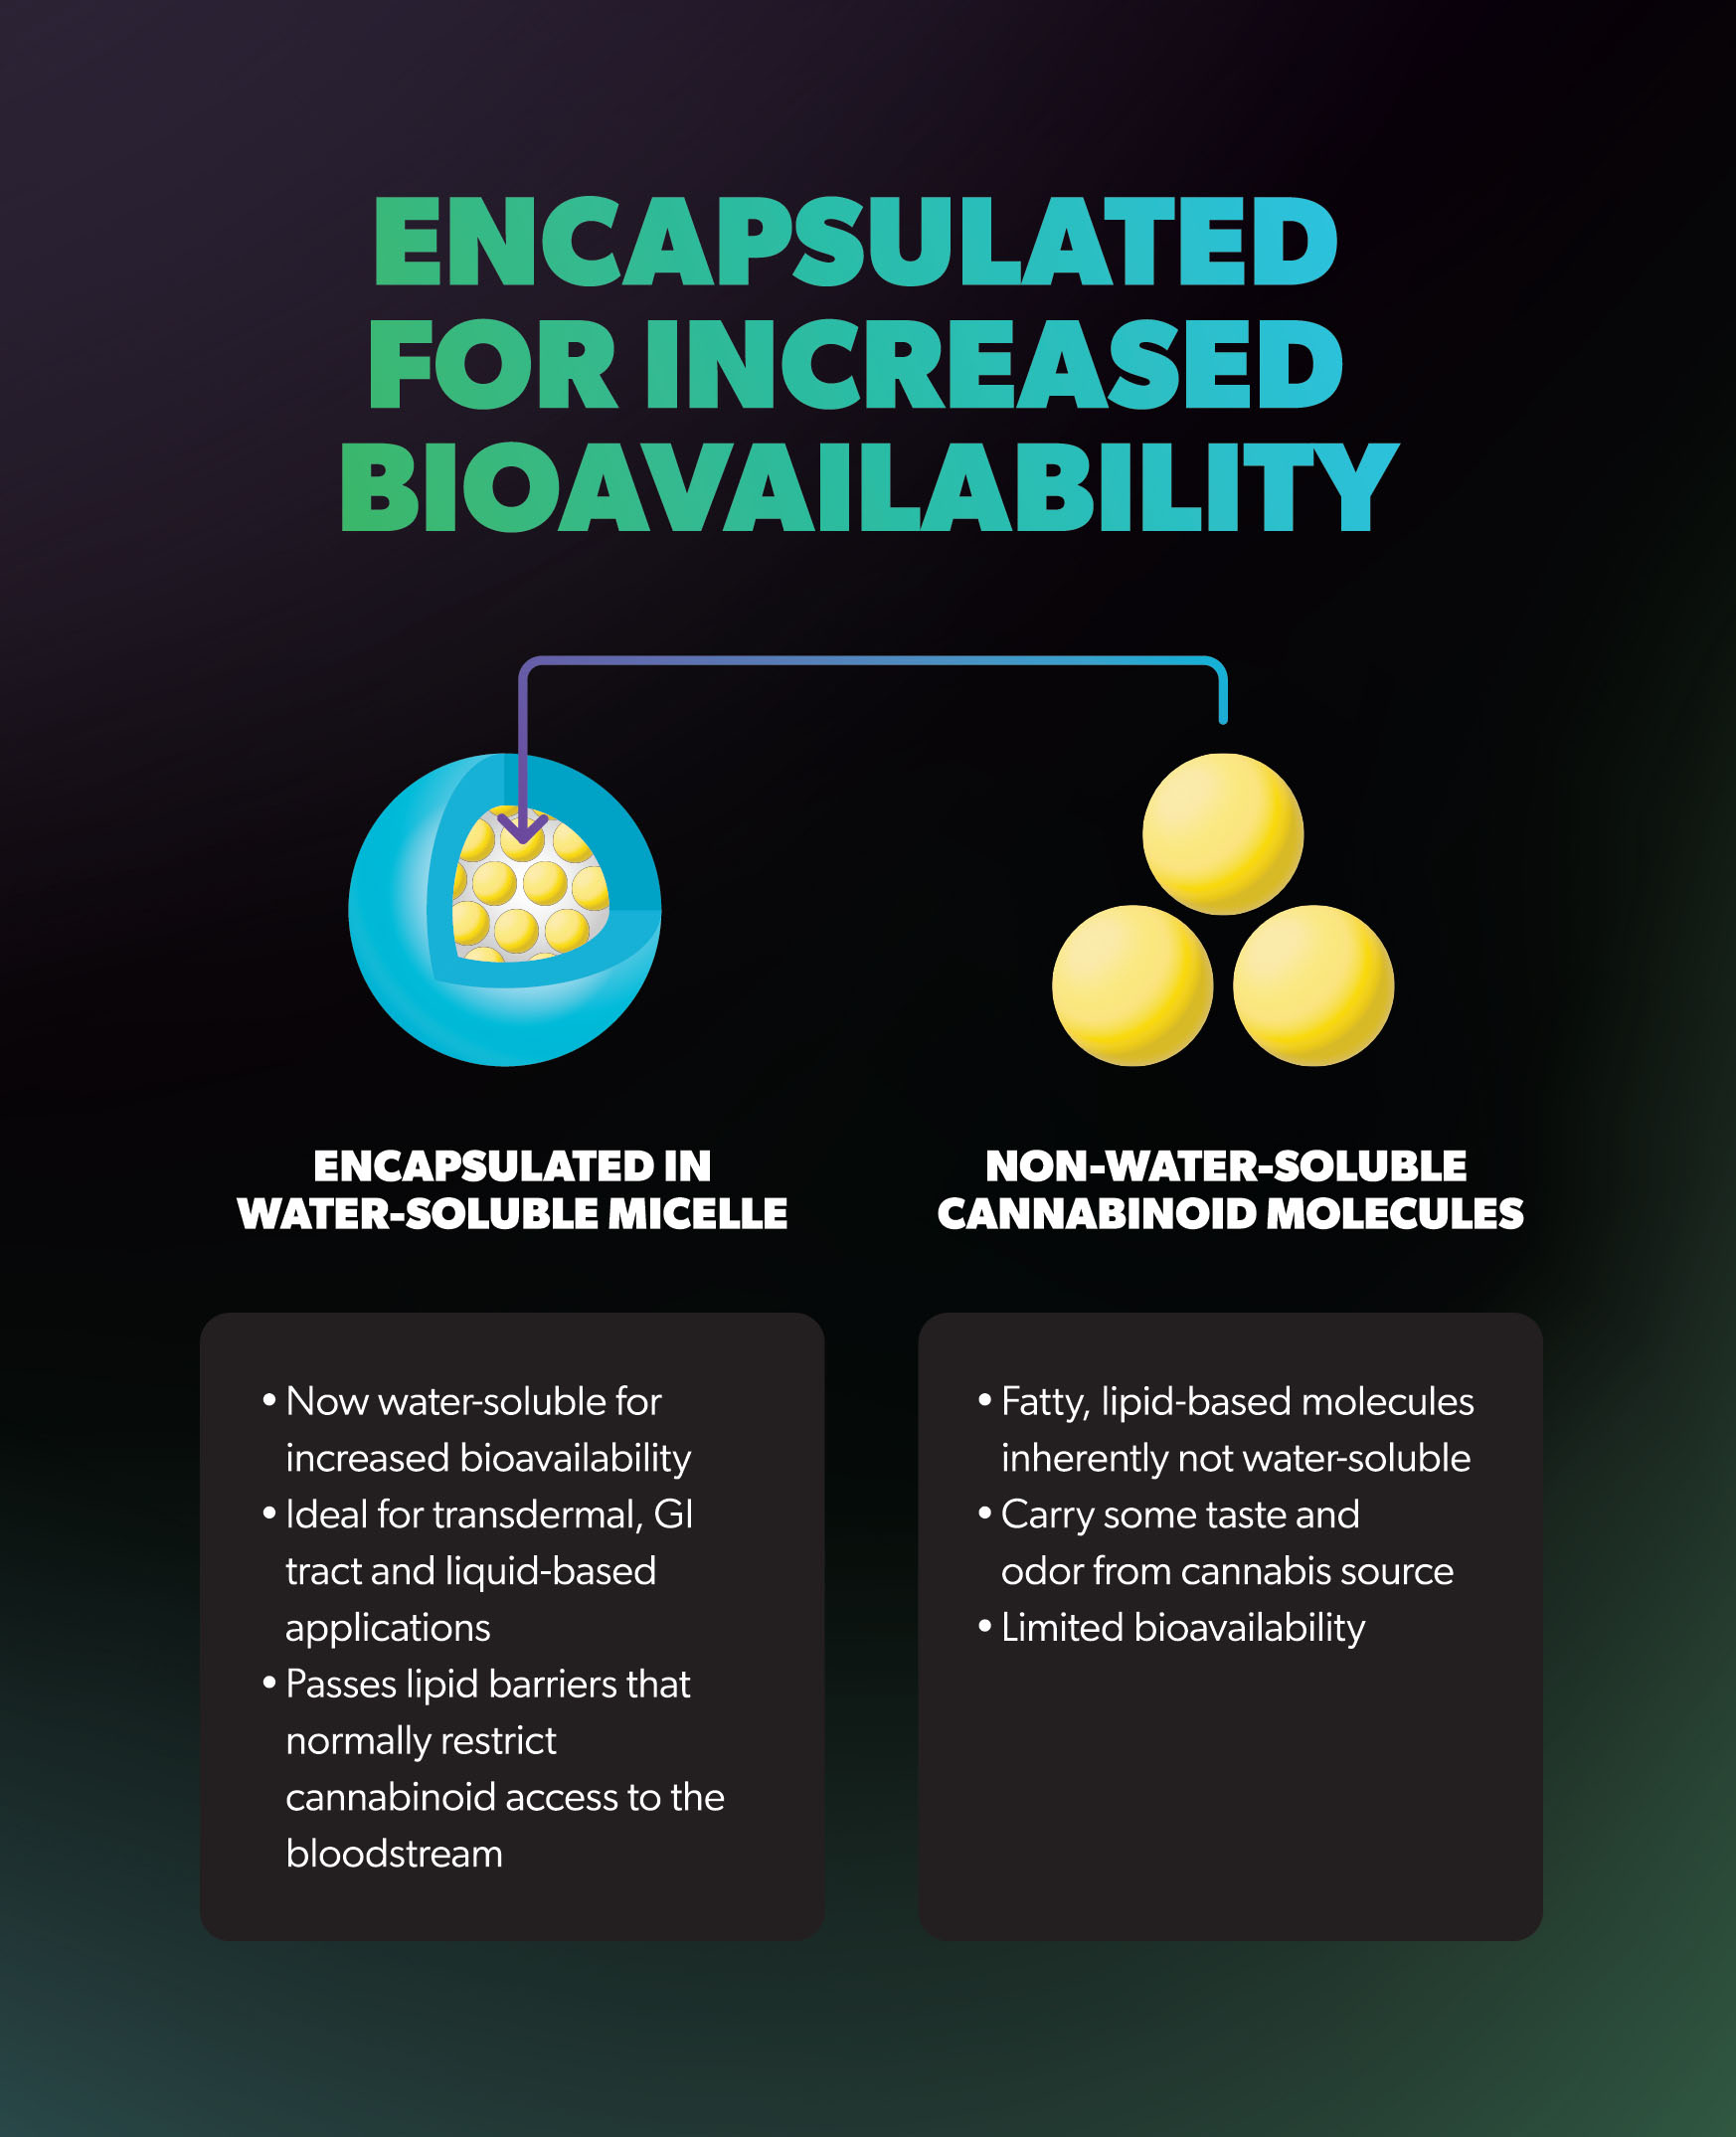 Encapsulated Bioavailability information